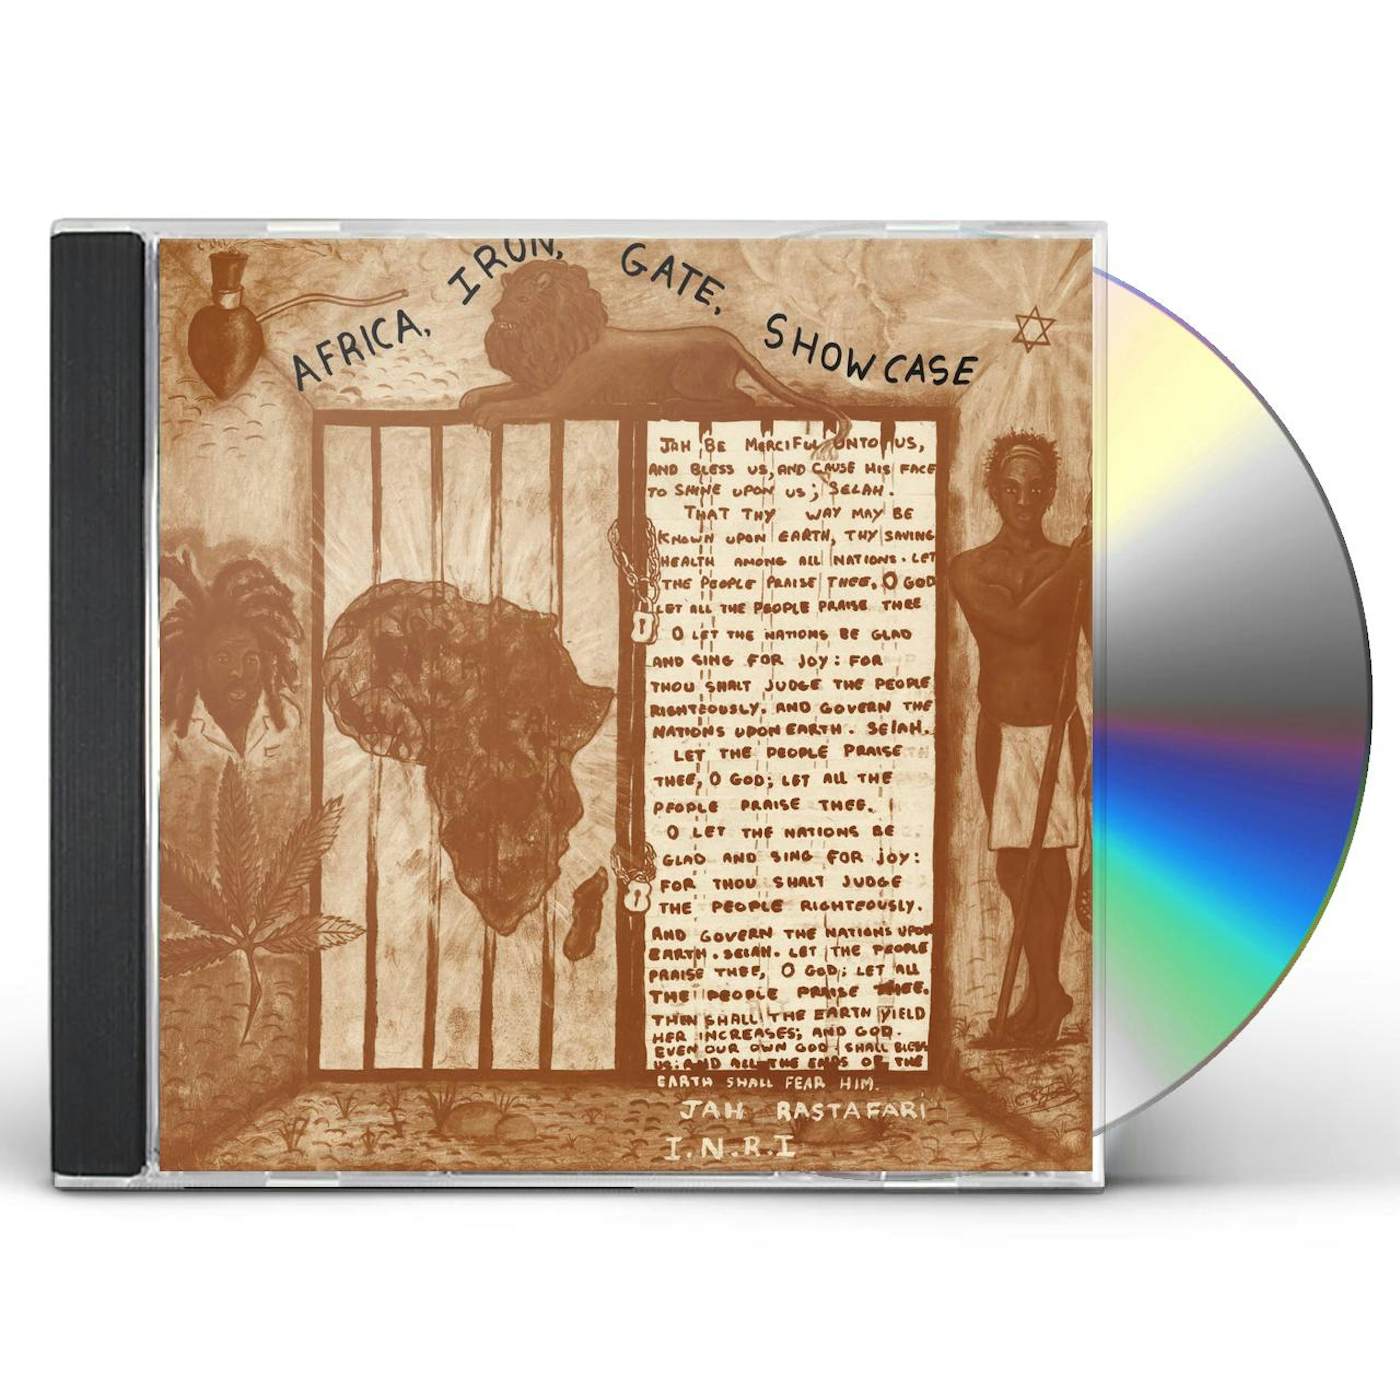 AFRICA IRON GATE SHOWCASE / VARIOUS CD